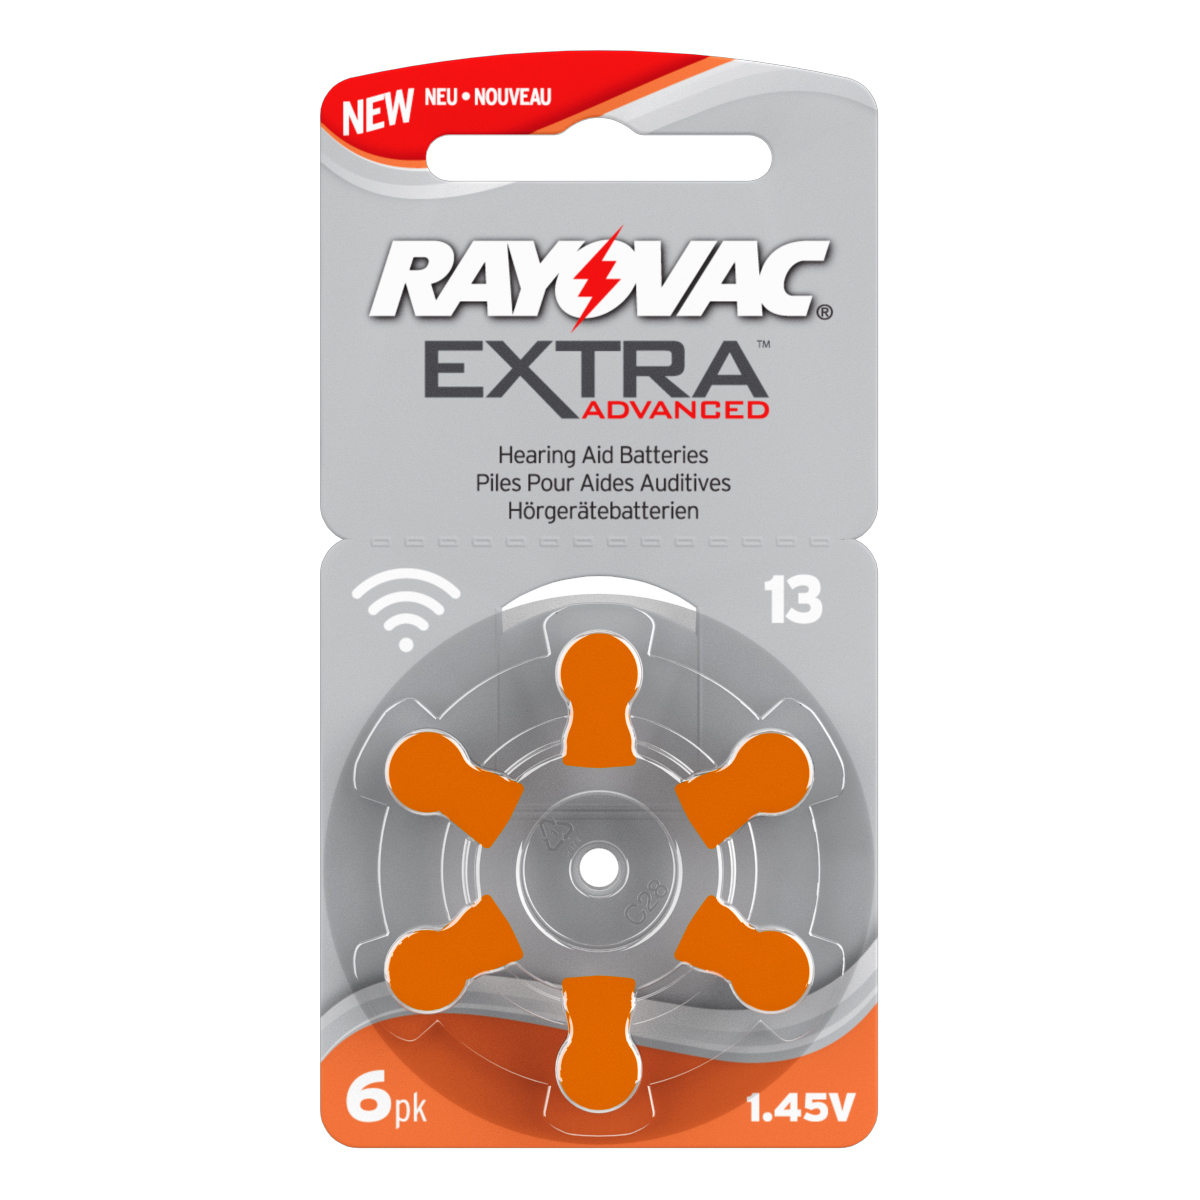 Rayovac Extra Advanced 60 pack Size 13